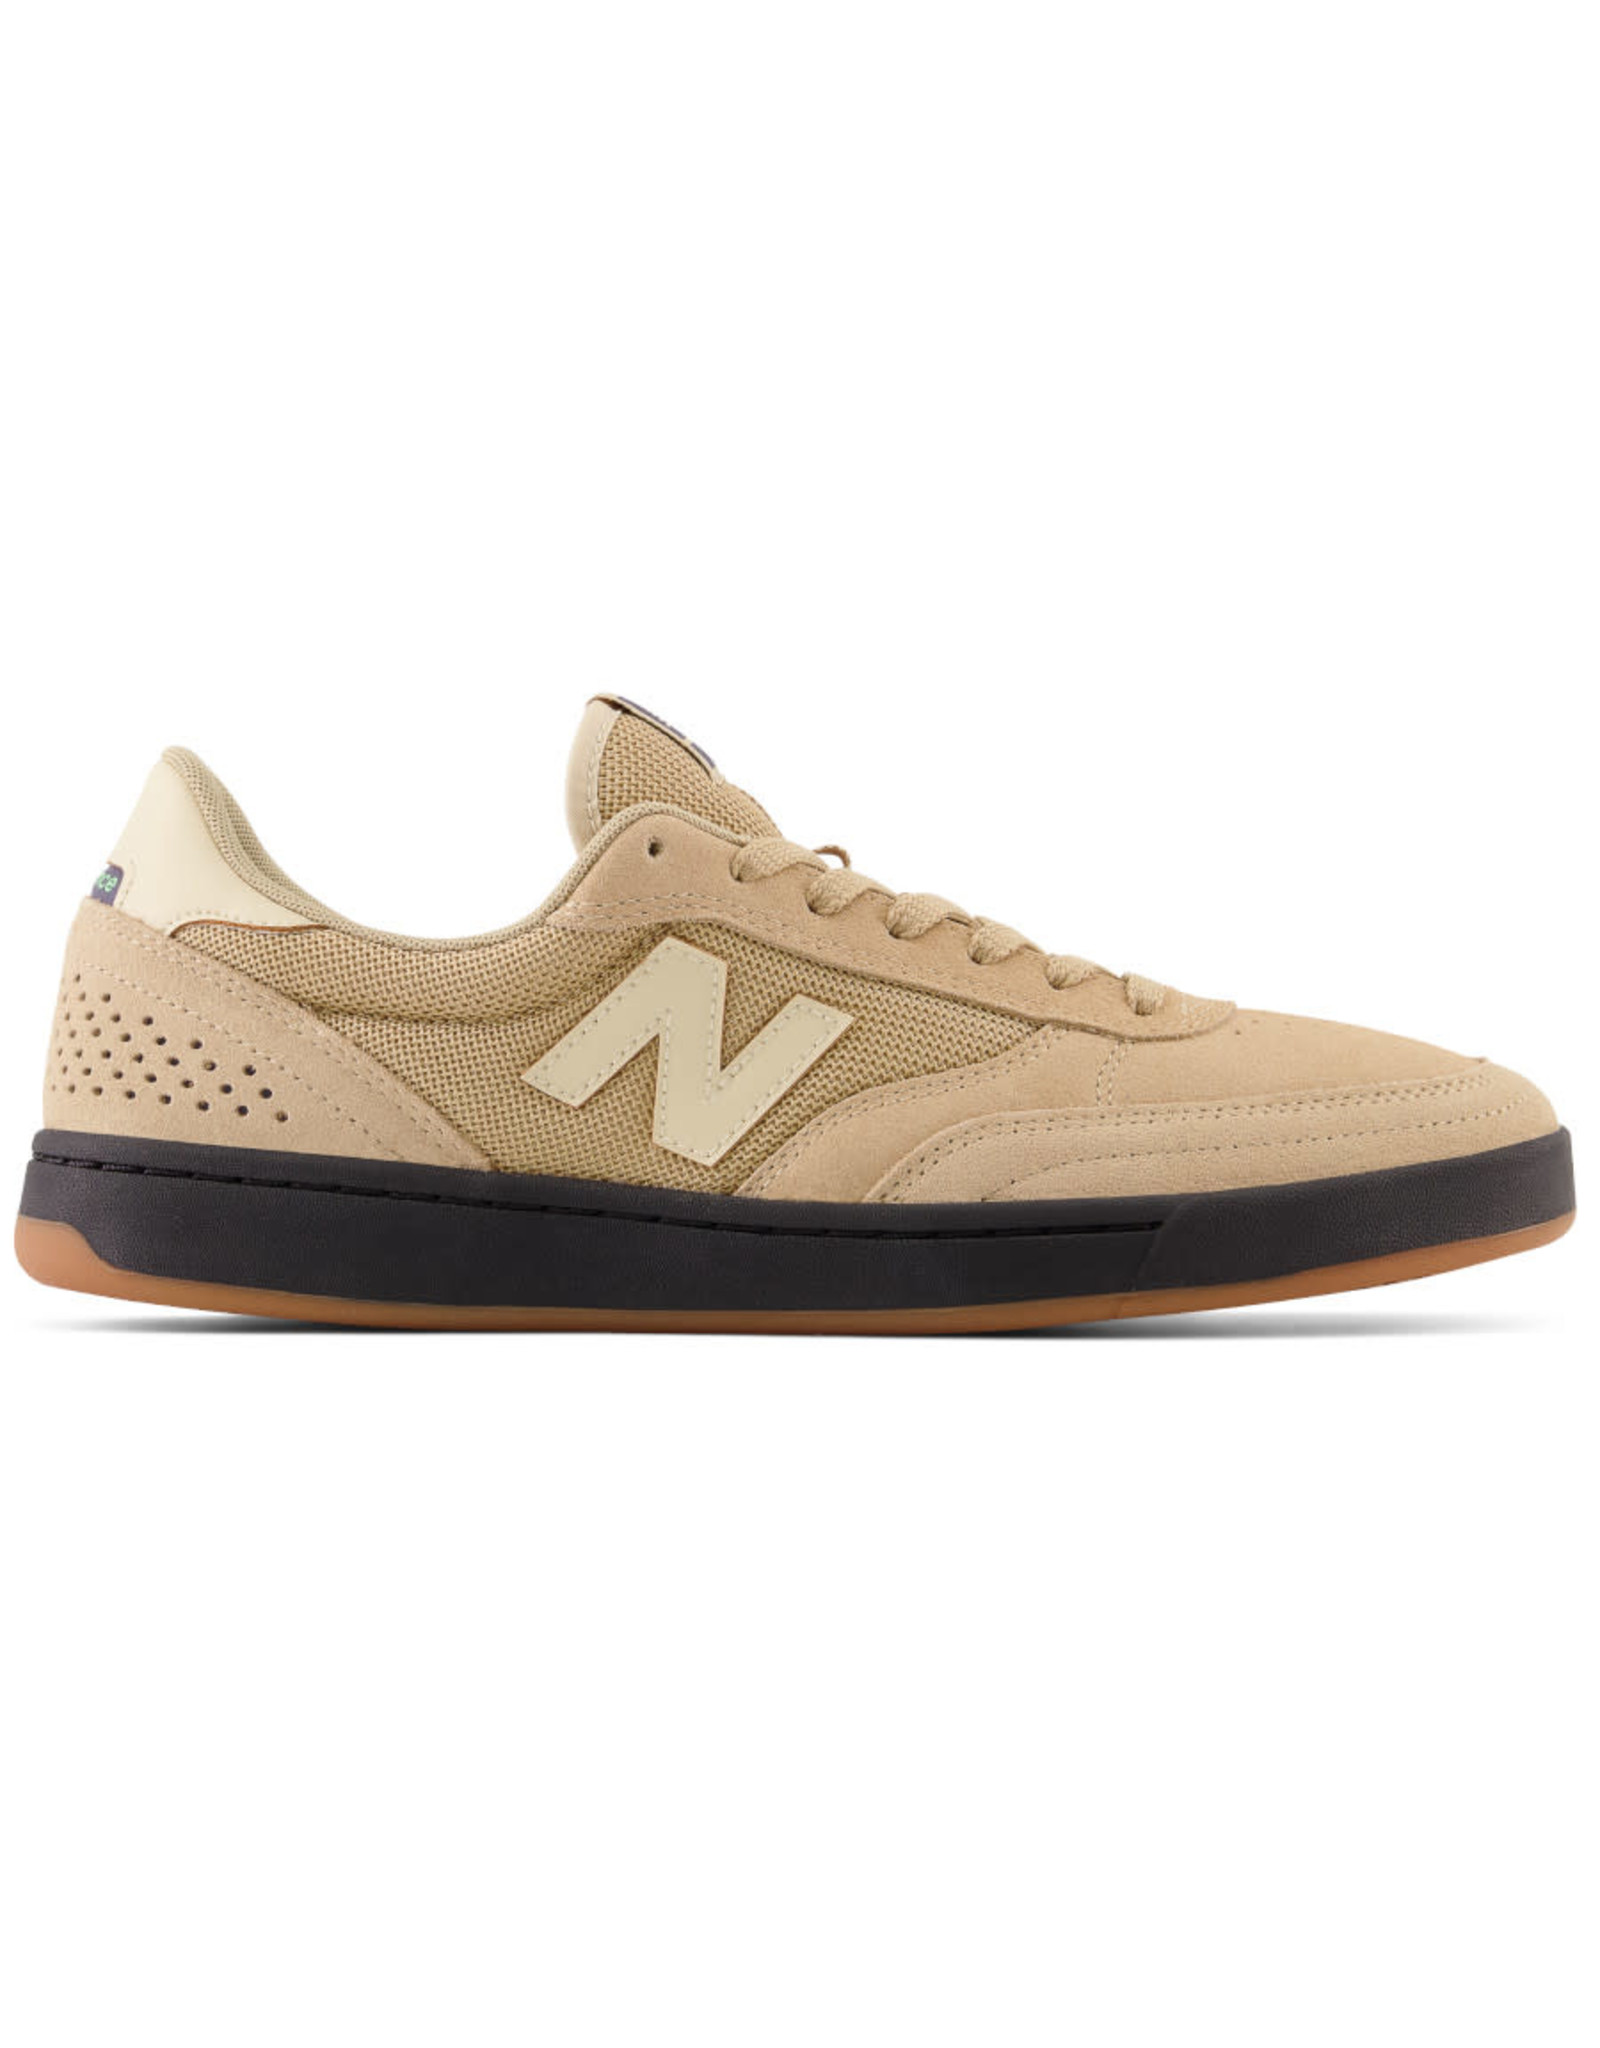 New Balance Numeric New Balance Numeric Shoe 440 Low (Brown/Tan/Gum)